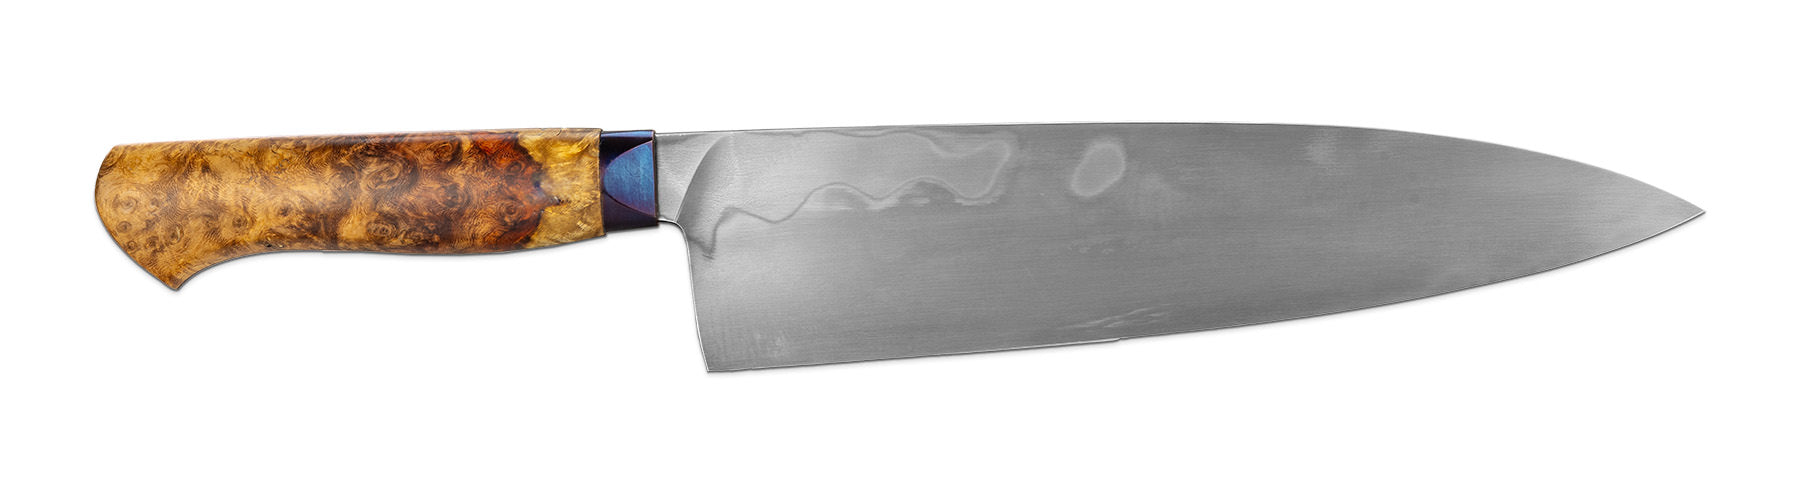 Corey Dunlap - Custom W2 9 Chef Knife - New West KnifeWorks